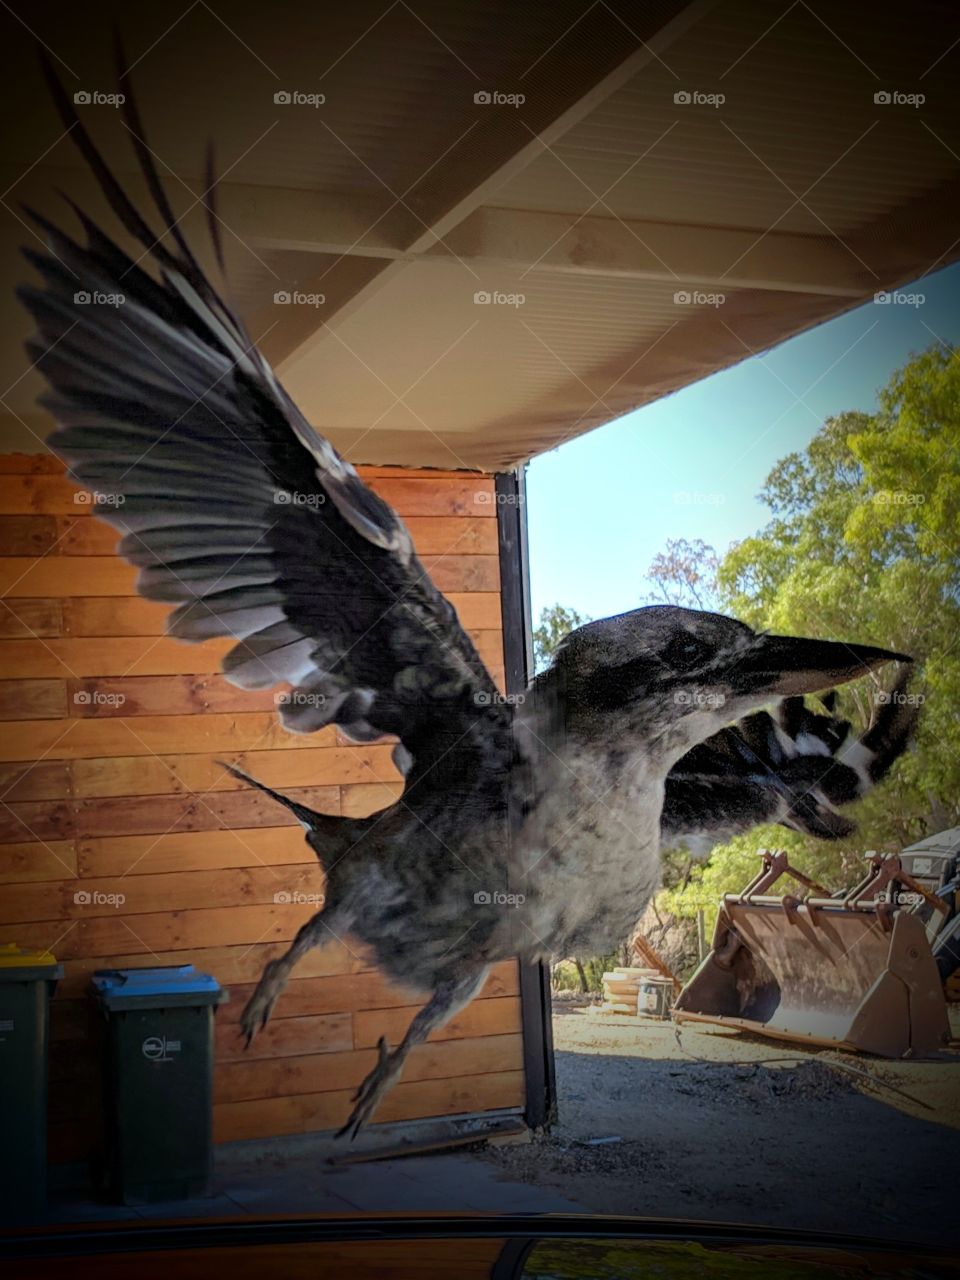 Kookaburra taking flight gracefully